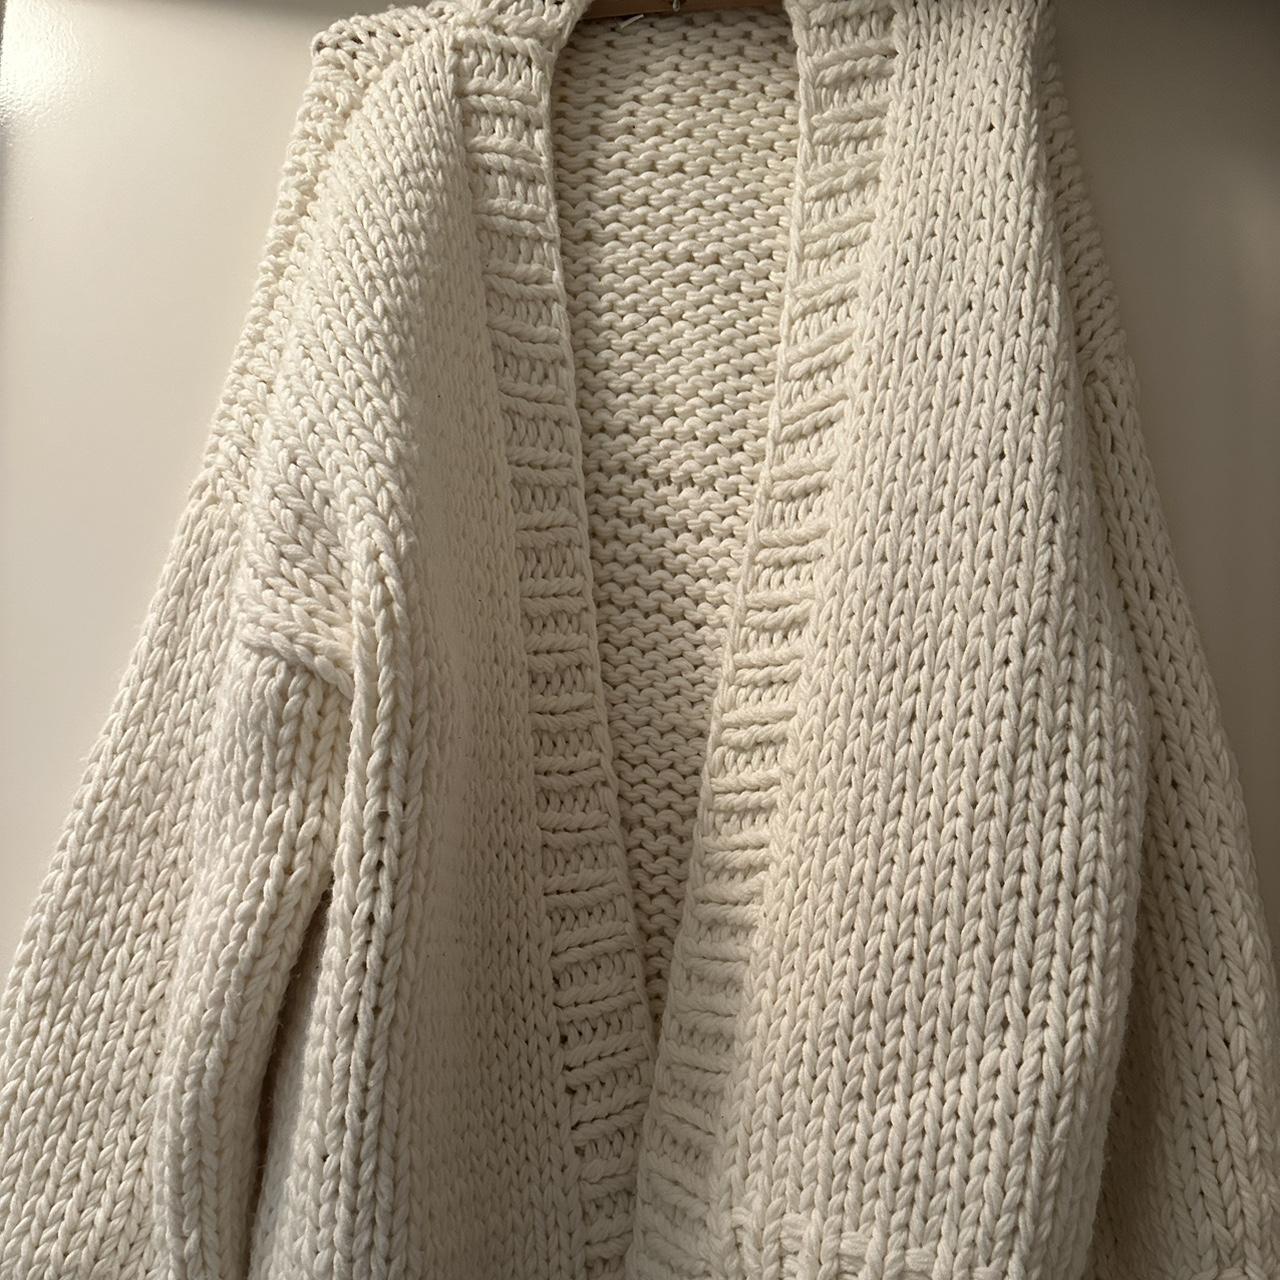 Mooloola White Knitted Jumper Size: M/L Worn 2-3... - Depop